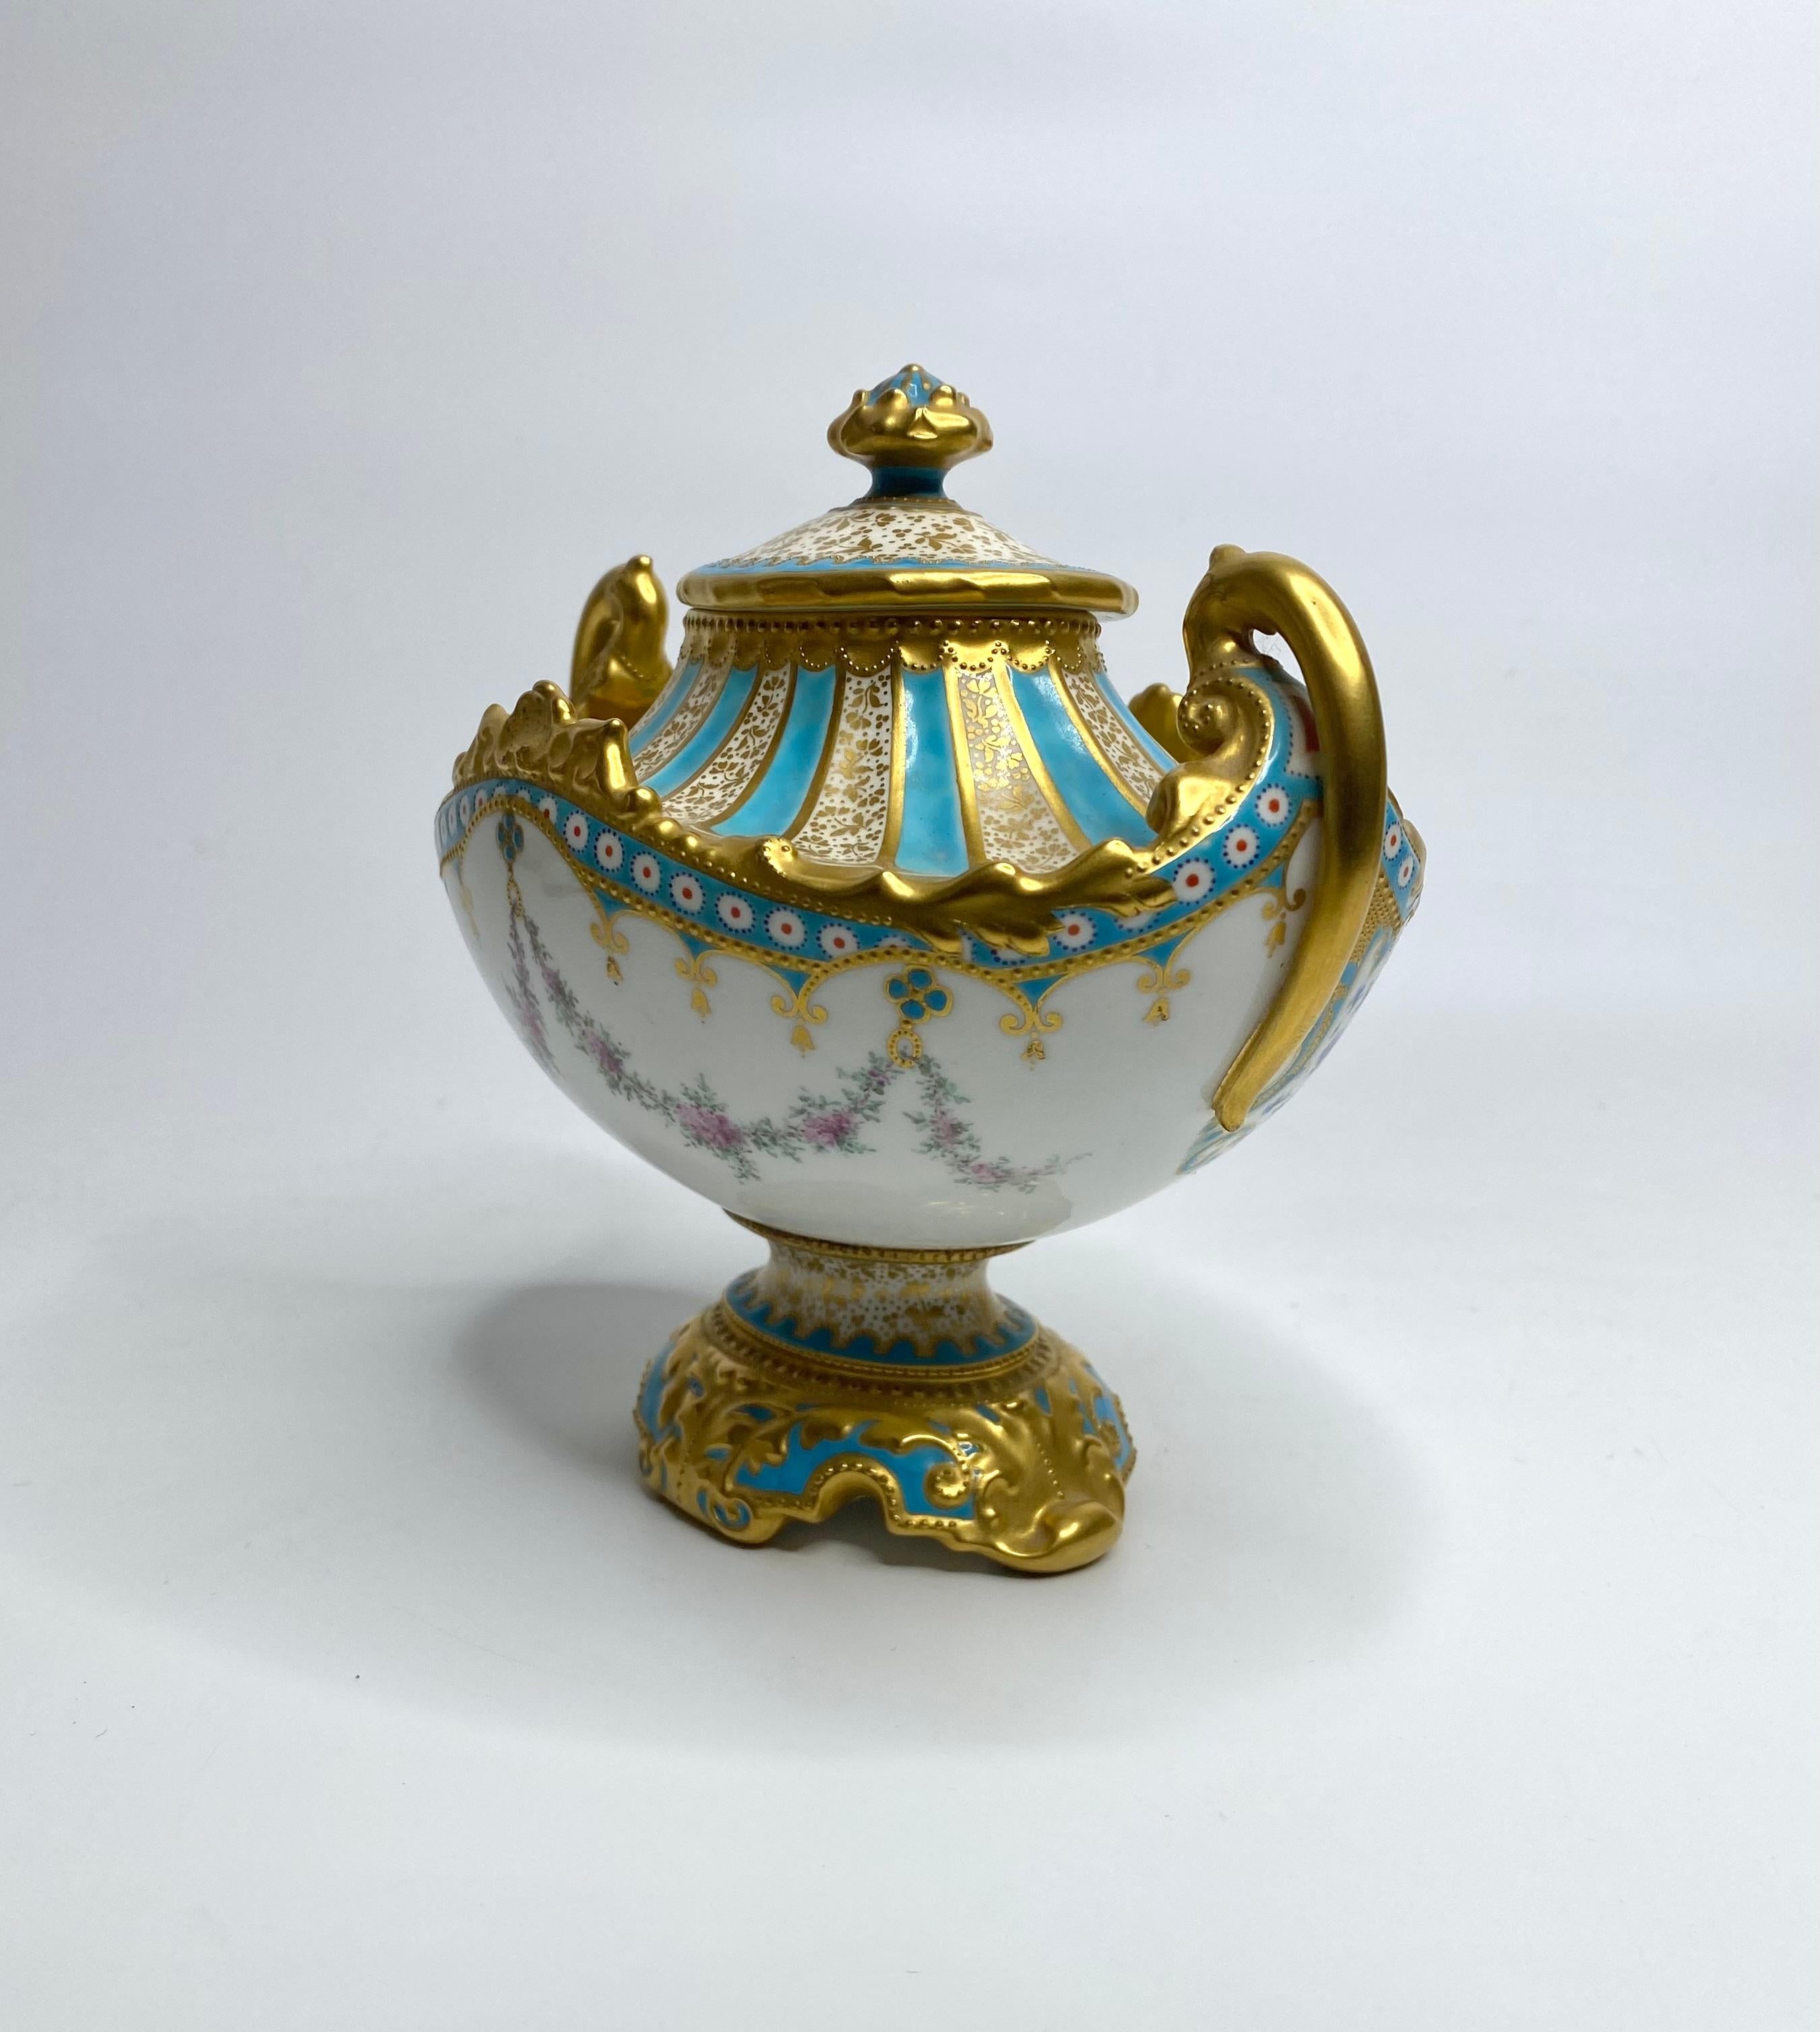 Louis XV Royal Crown Derby porcelain vase and cover. Desire Leroy, d. 1897. For Sale